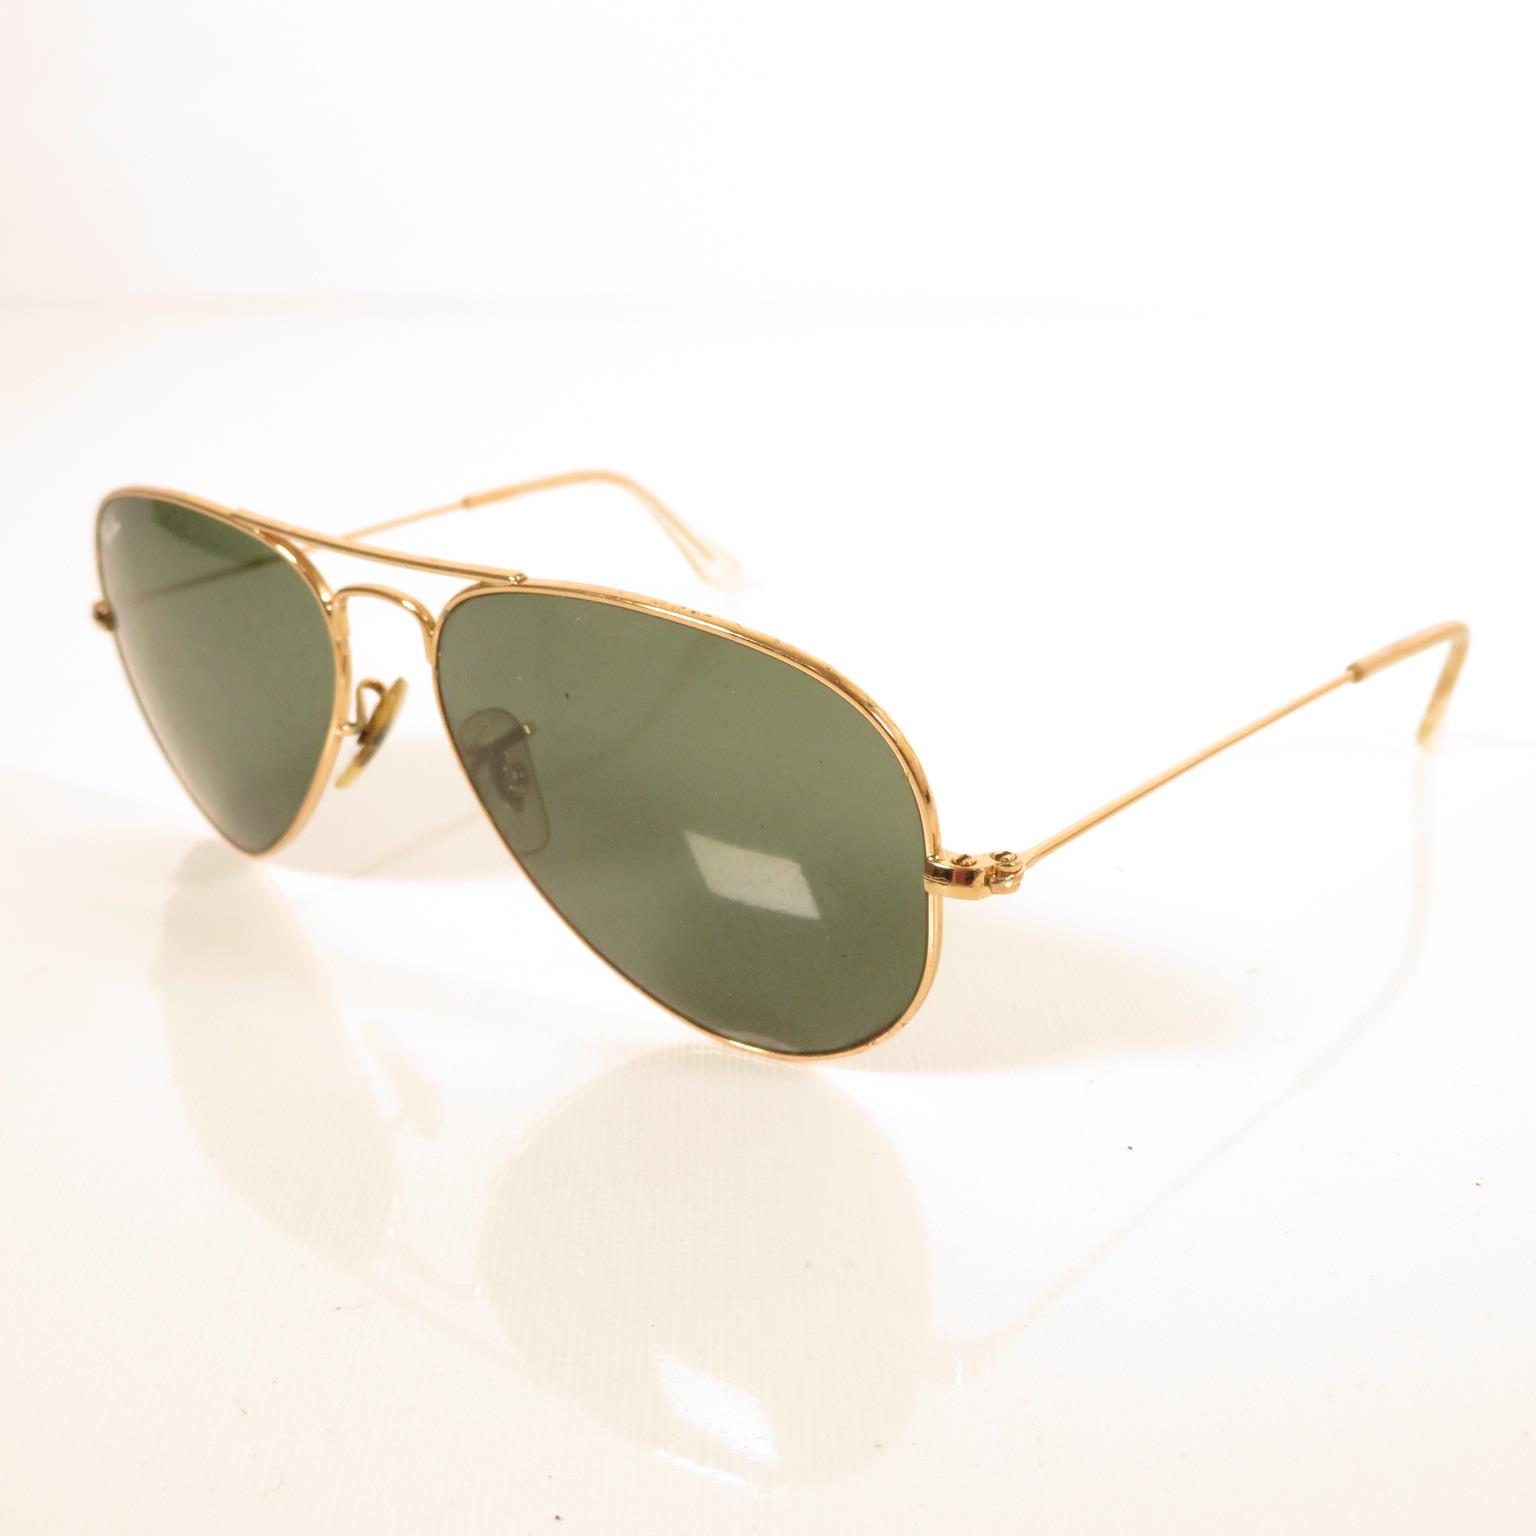 5x sets Ray Ban sunglasses - - Image 17 of 24